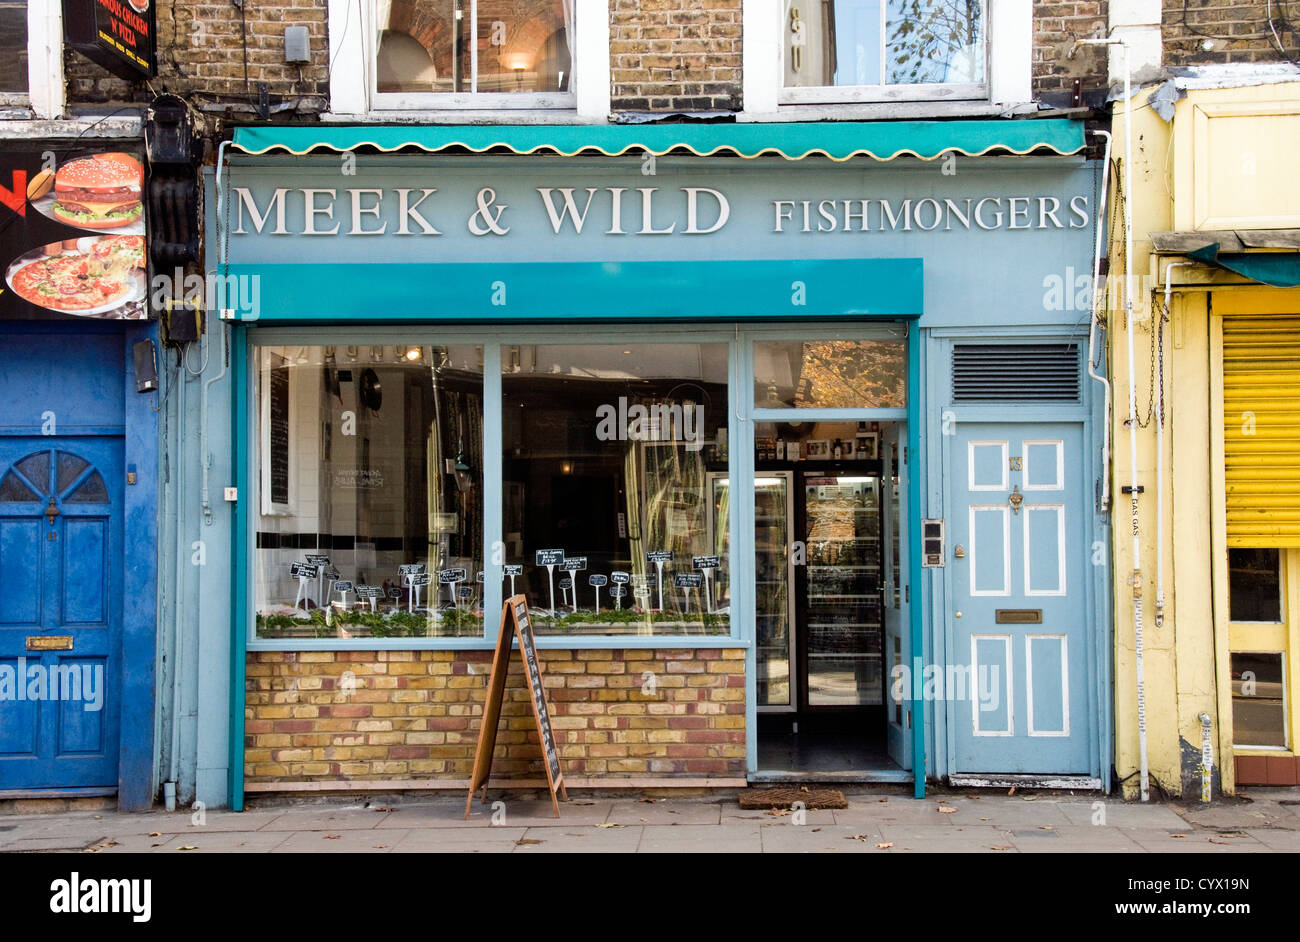 Meek & Wild Fishmongers, Highbury Park Barn, Highbury, N5 London Borough of Islington England UK Stock Photo